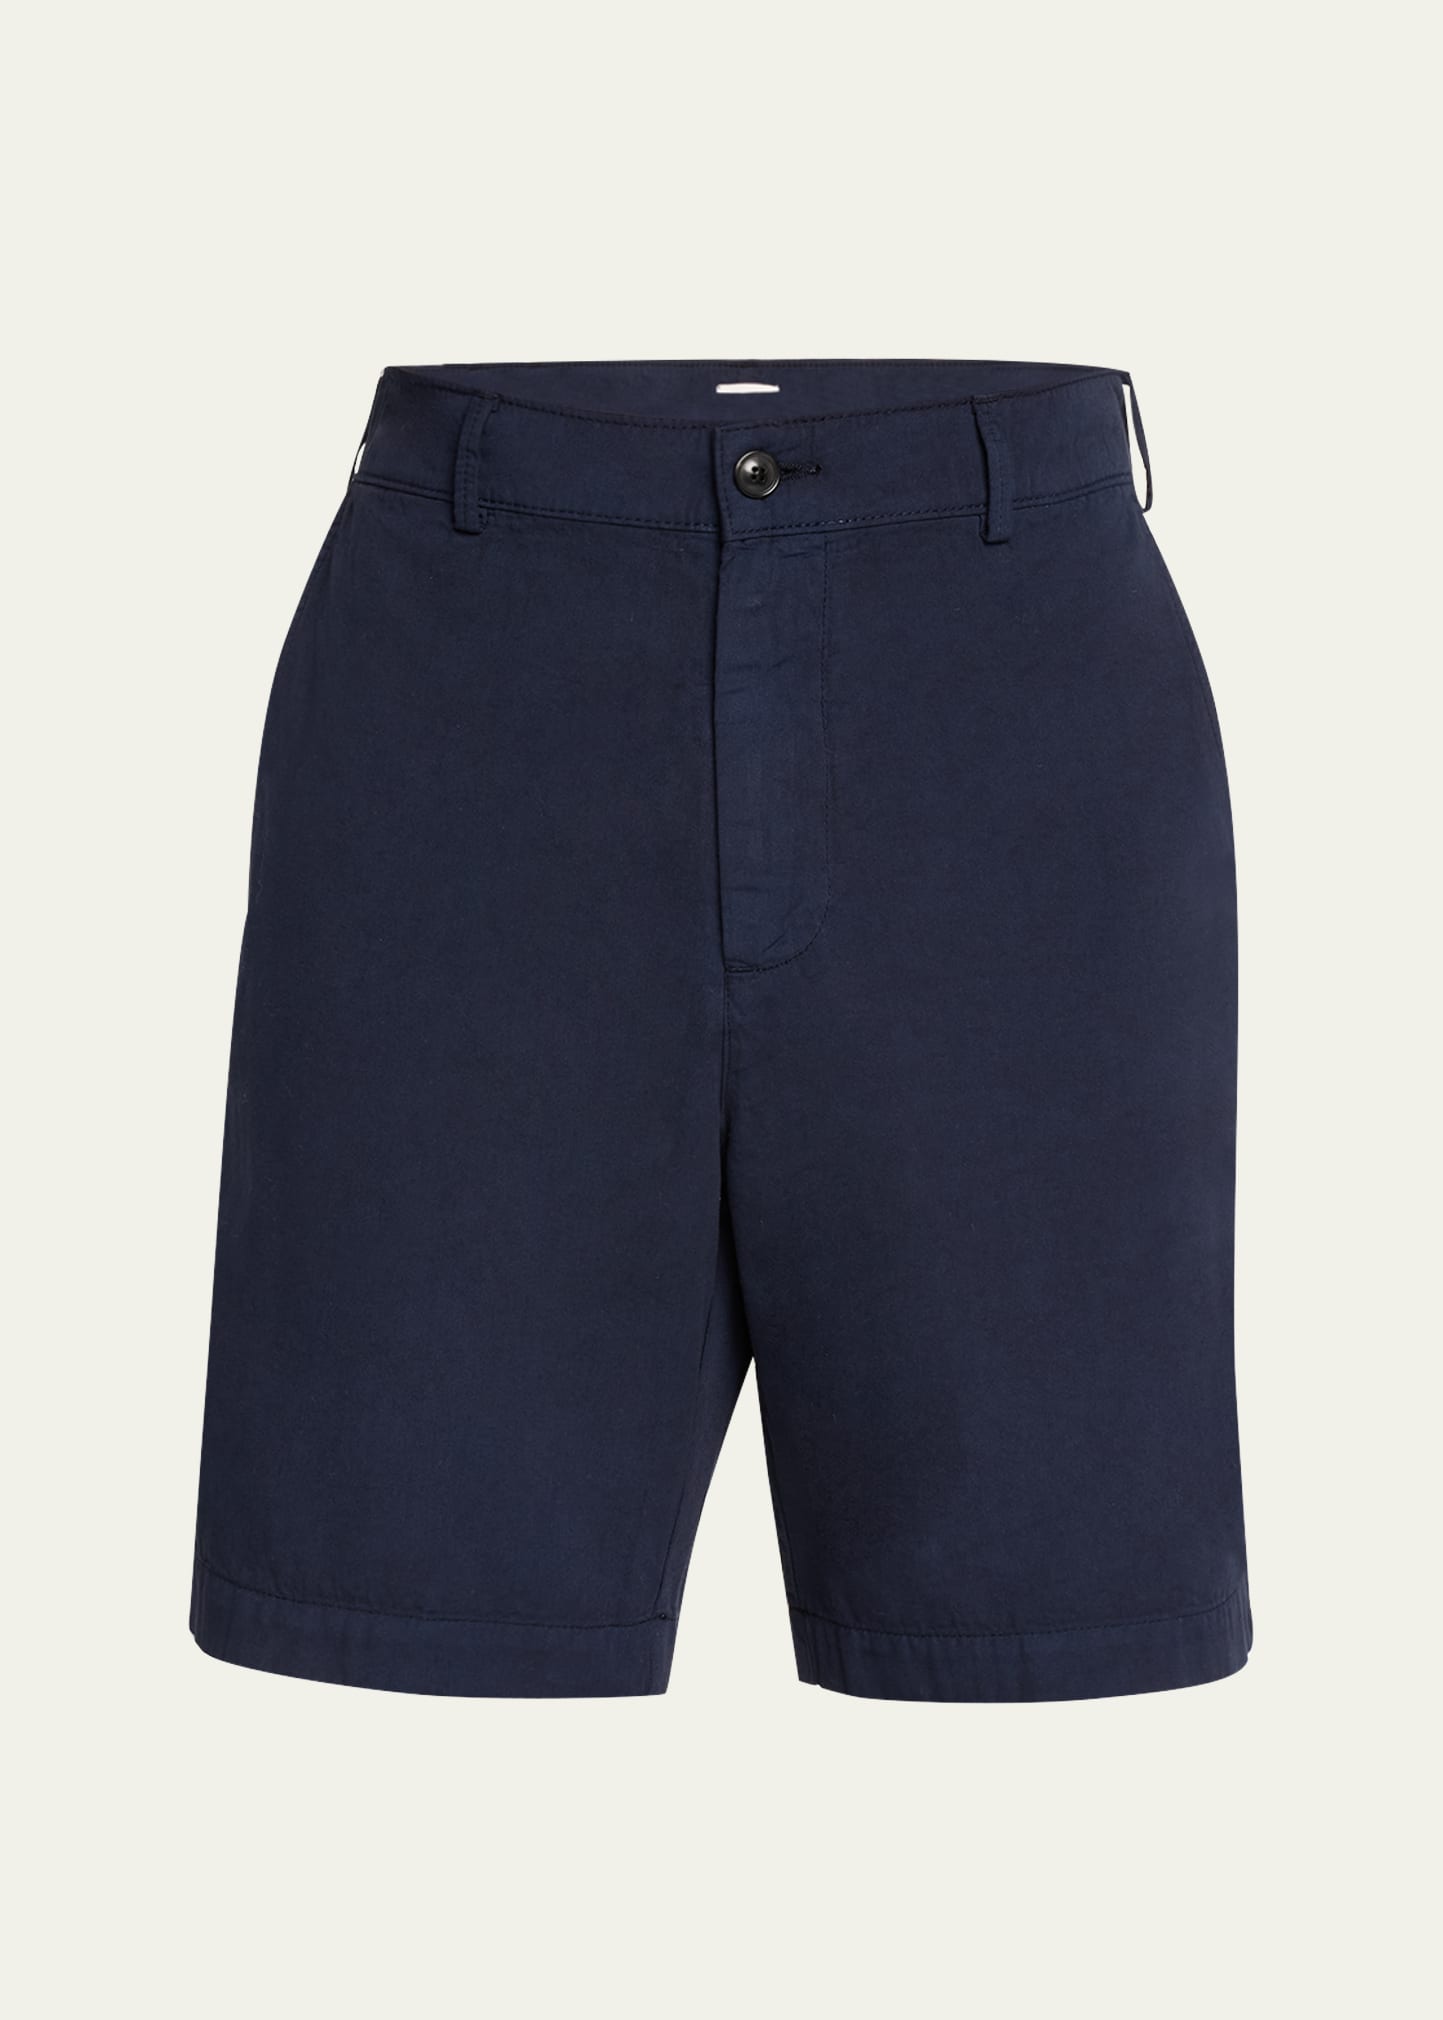 Men's Winnet Cotton Shorts